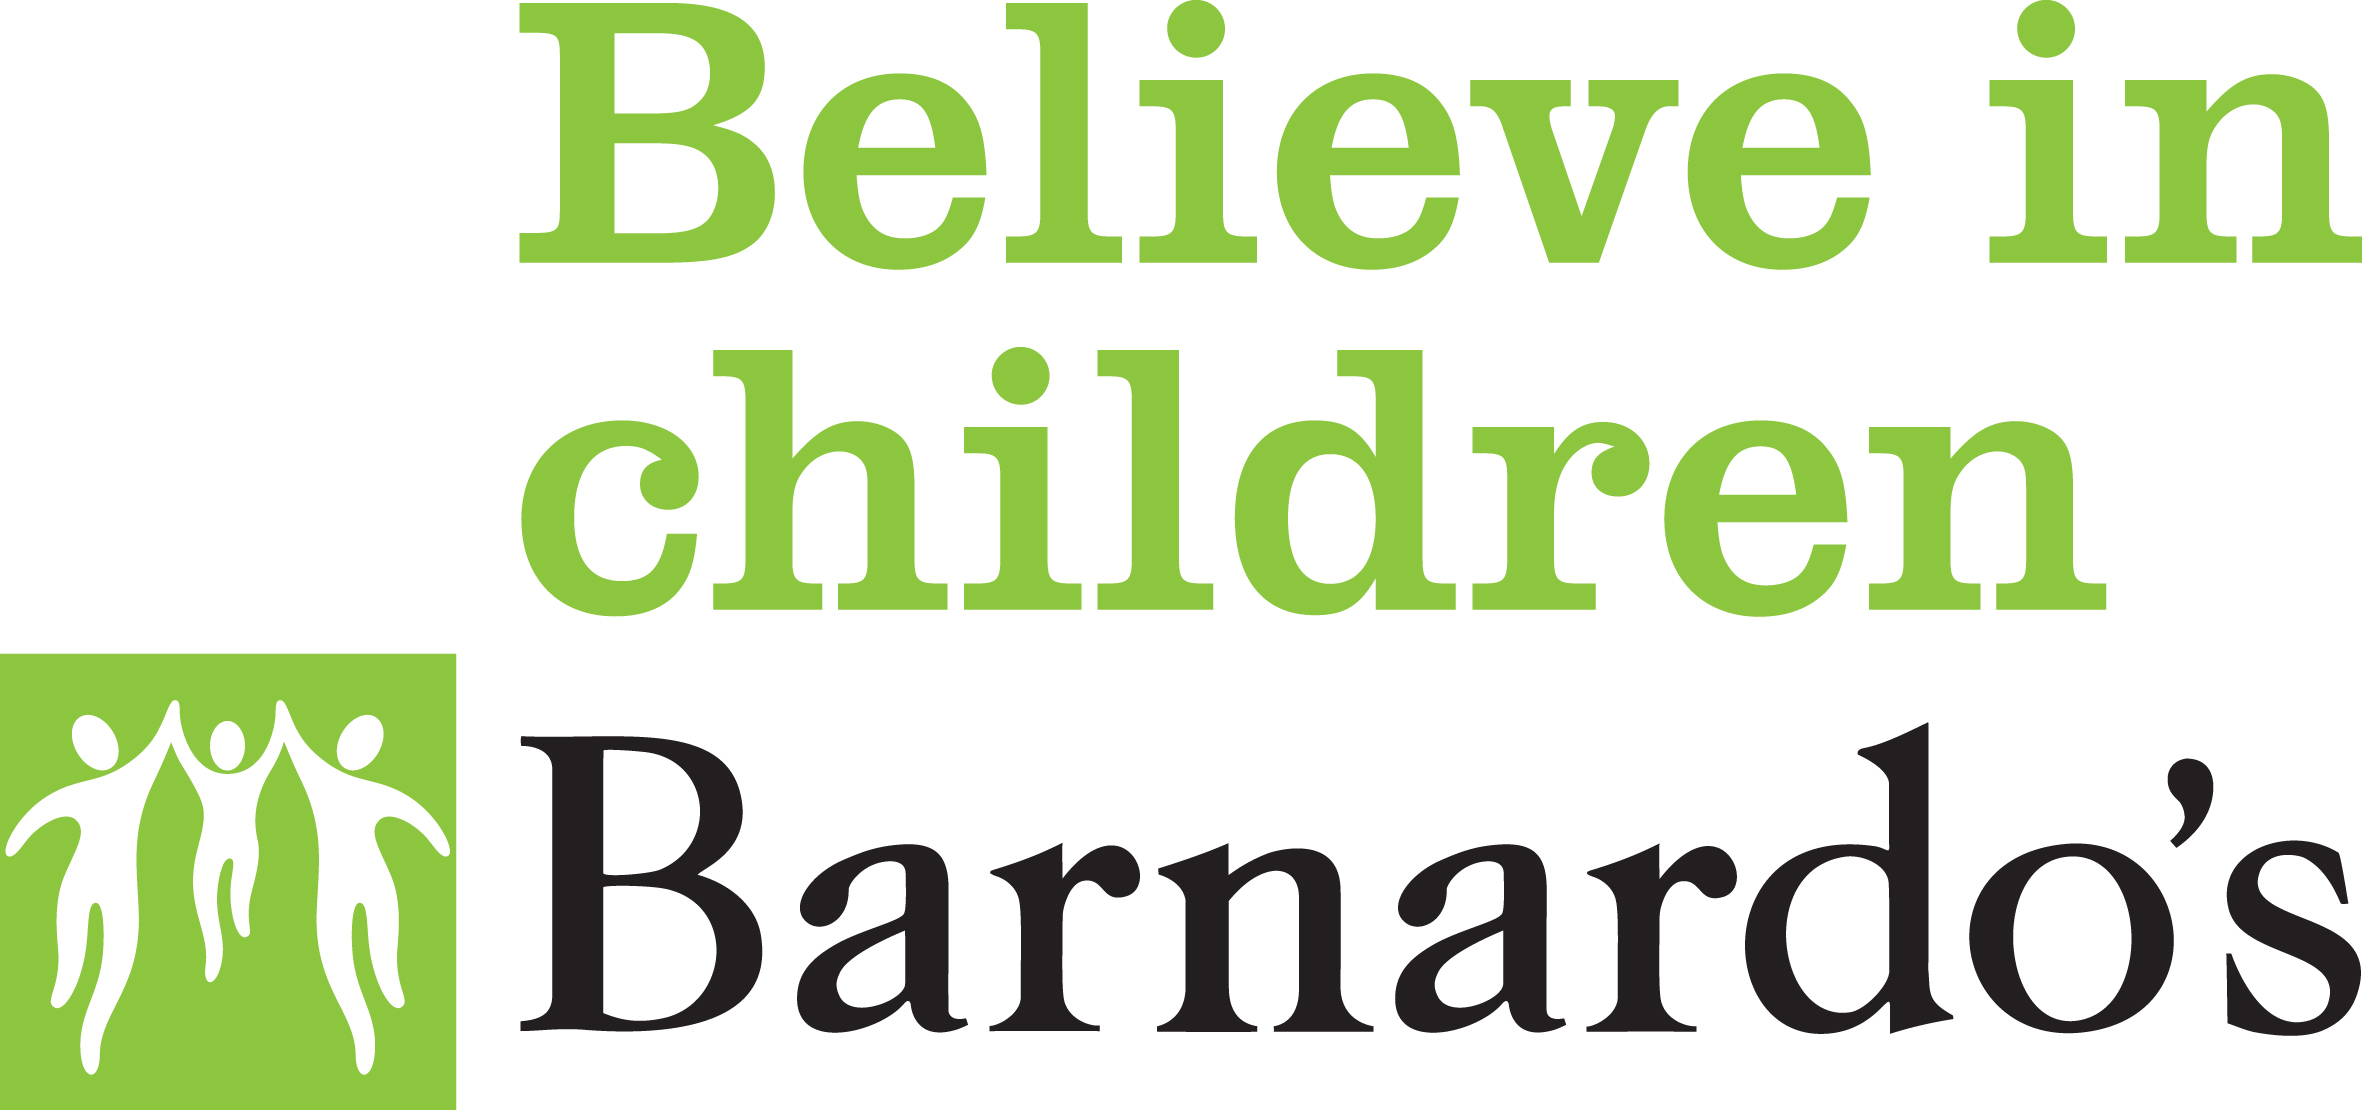 Barnardos Logo